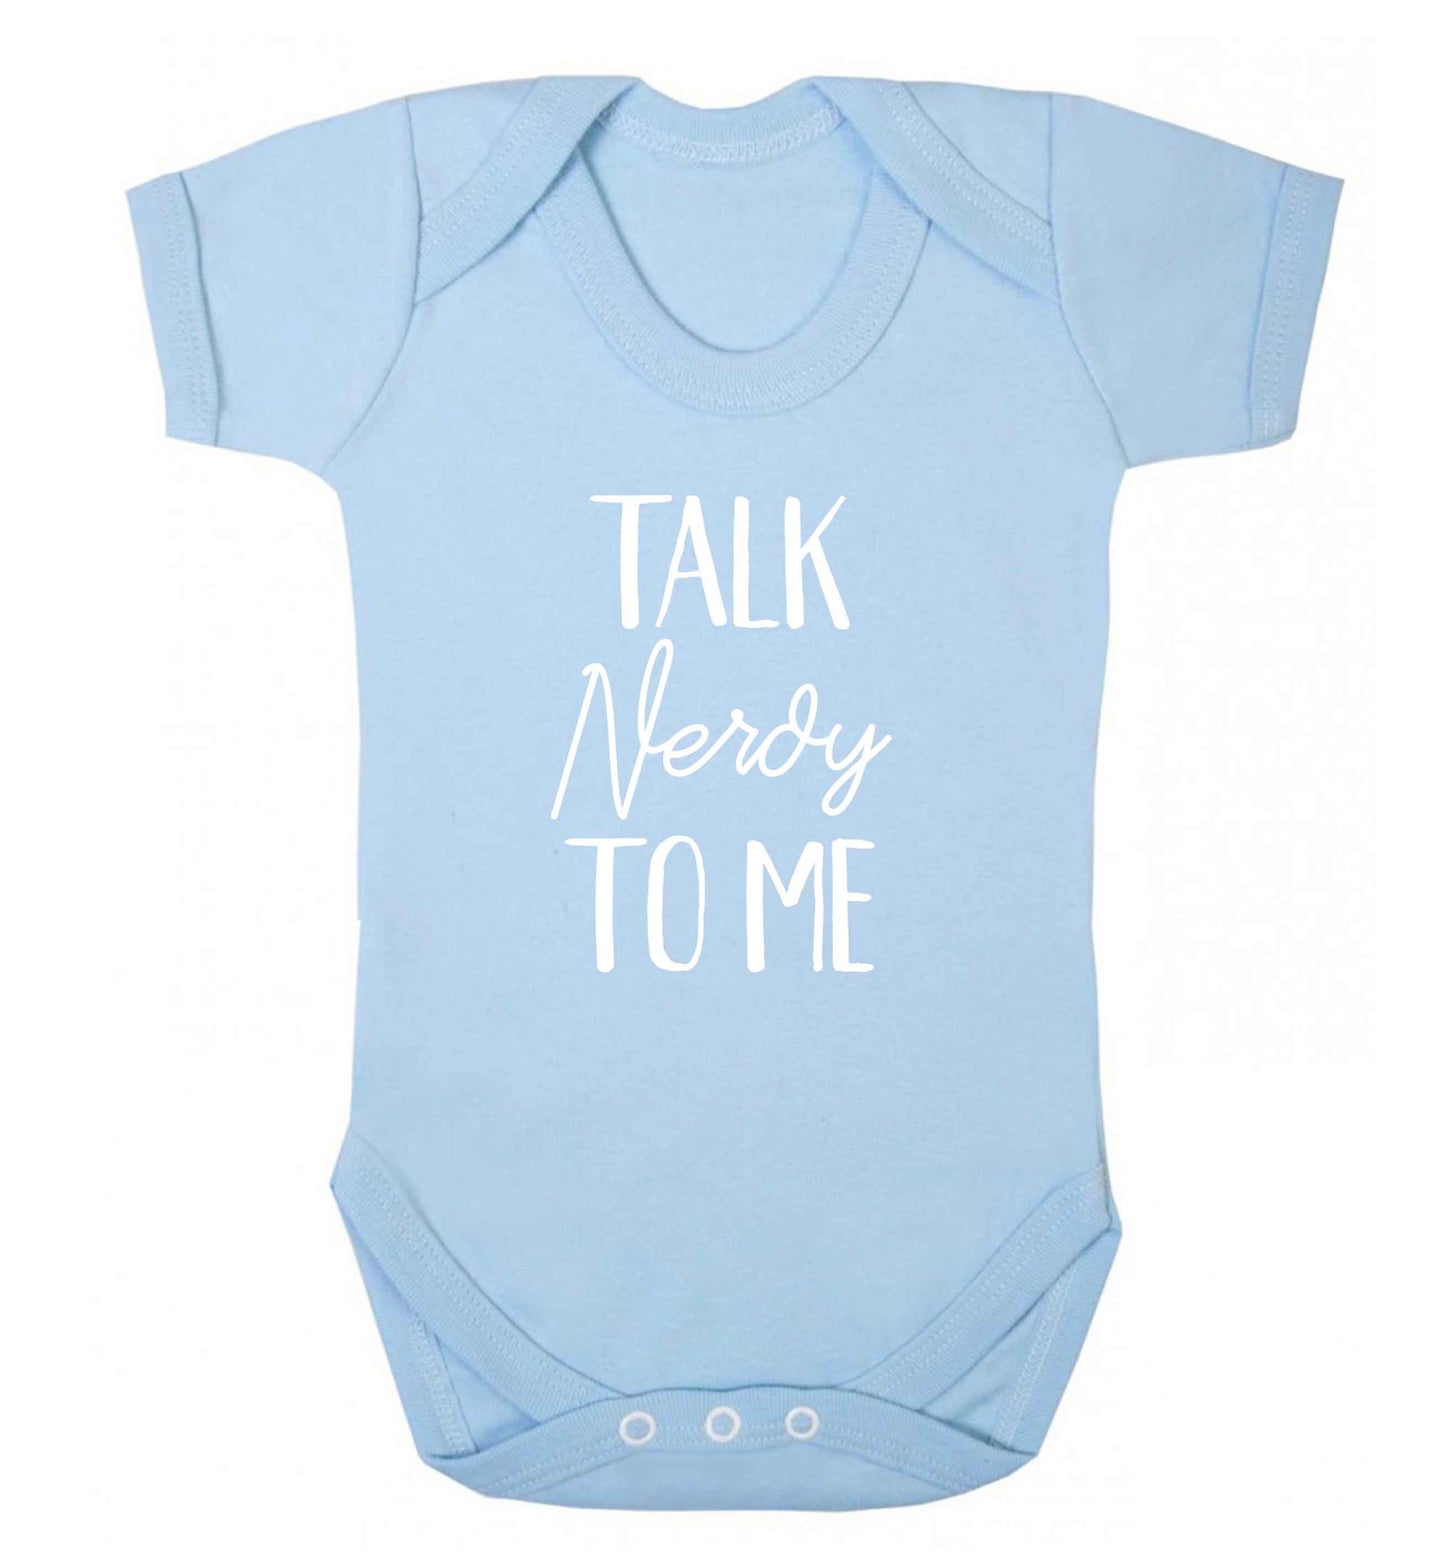 Talk nerdy to me baby vest pale blue 18-24 months